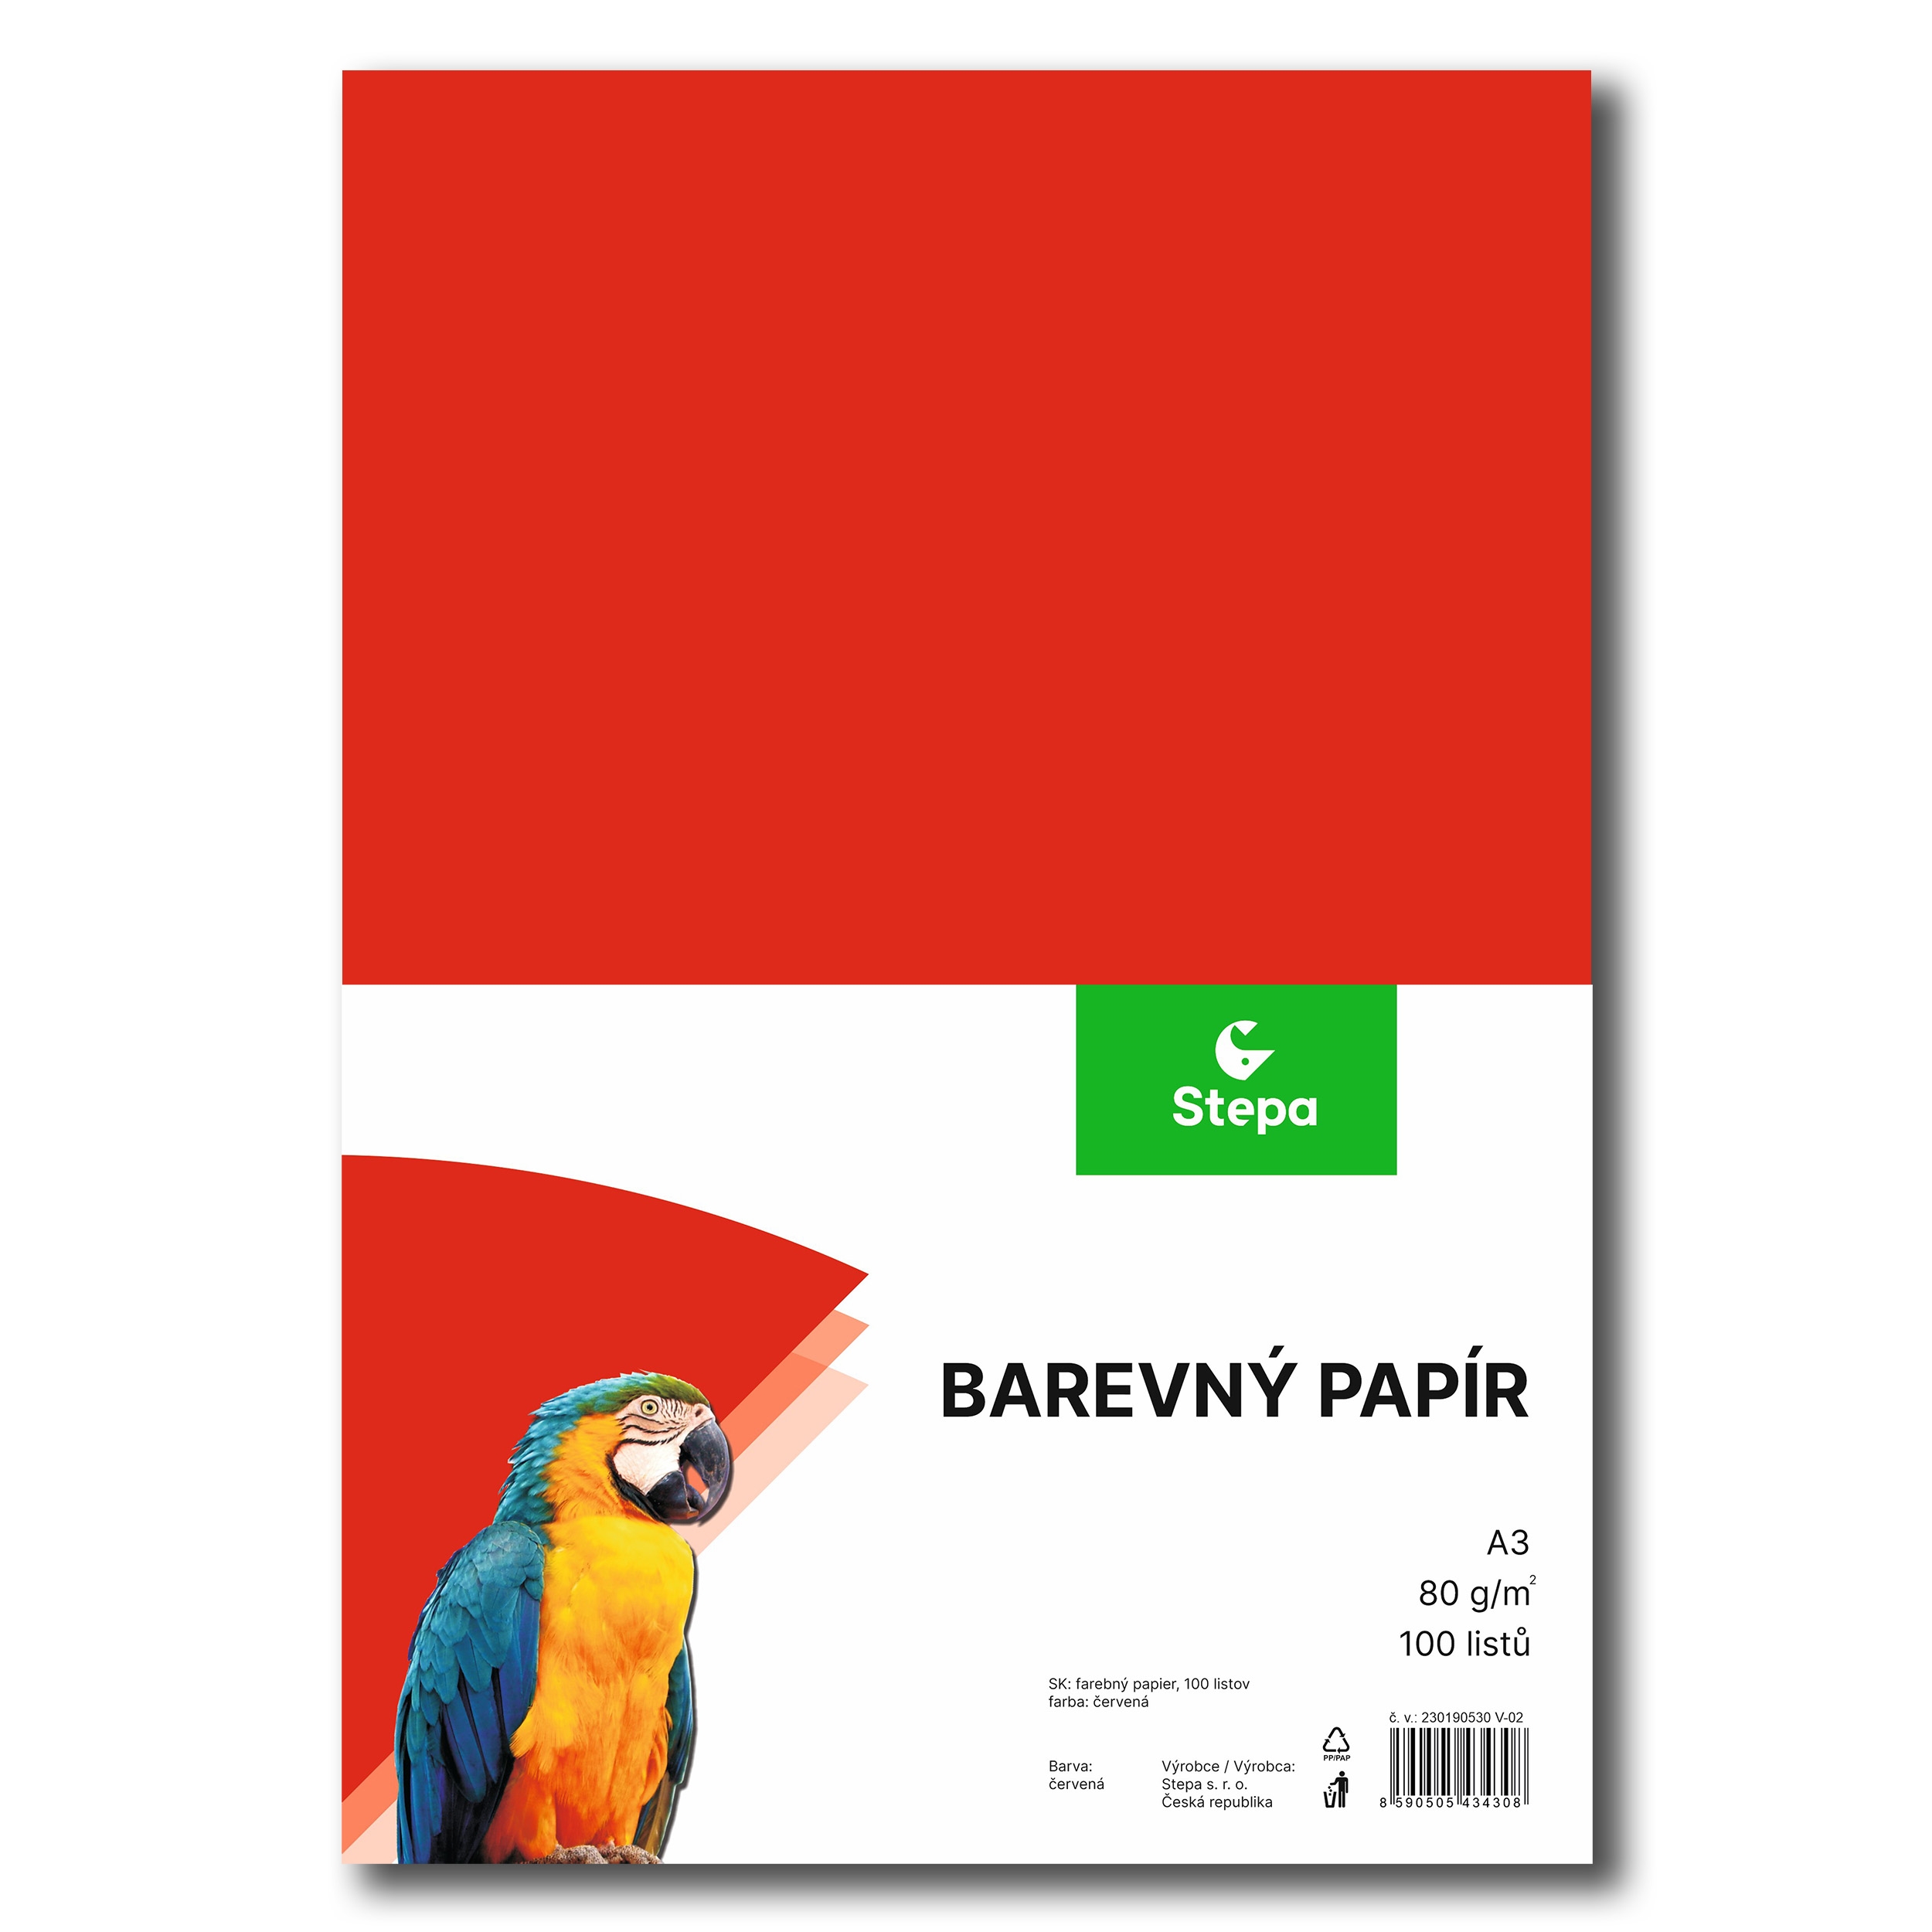 Barevný papír A3, 80g, červený, 100 listů